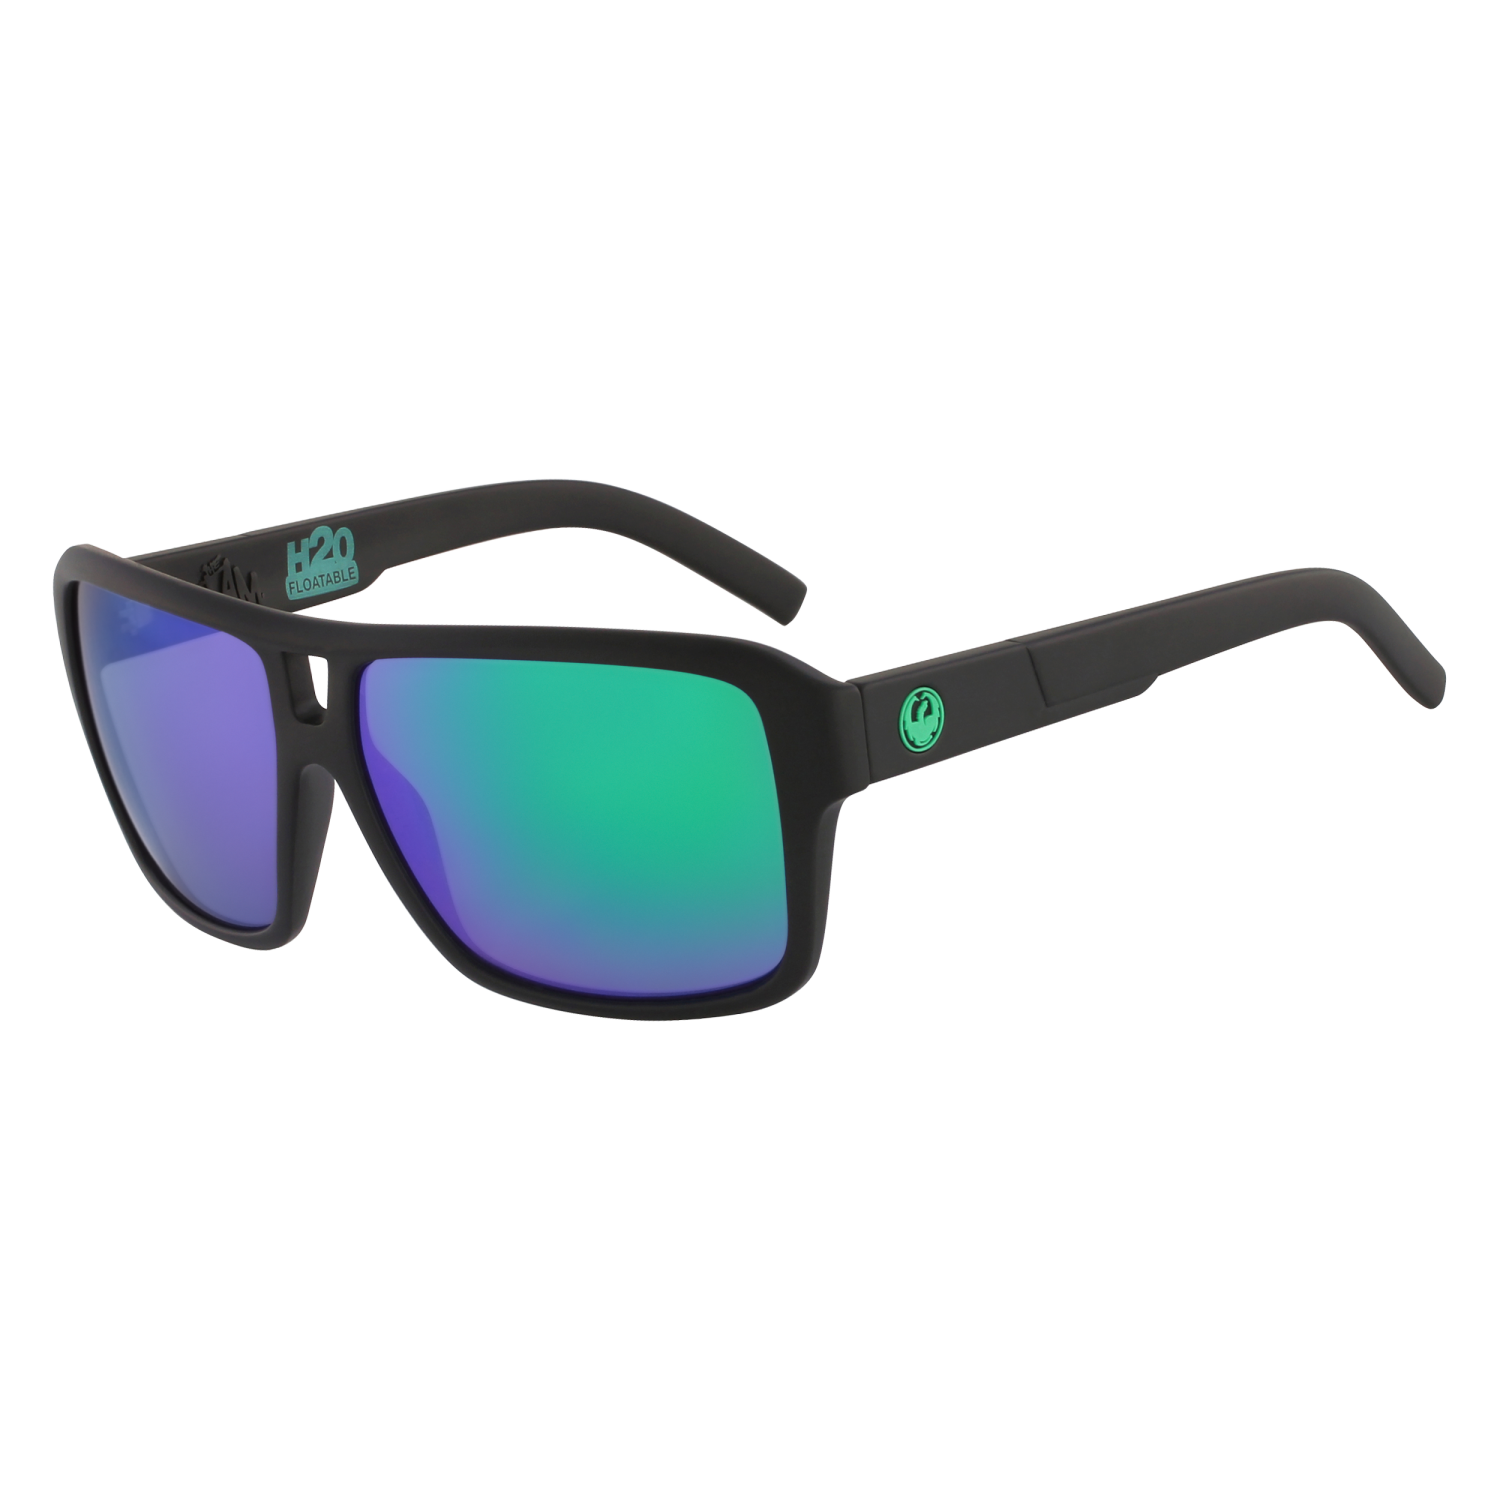 'Dragon The Jam H2O Performance Polar LumaLens Sunglasses' in 'Matte Black H20 W/ Lumalens Green Ion Polar' colour